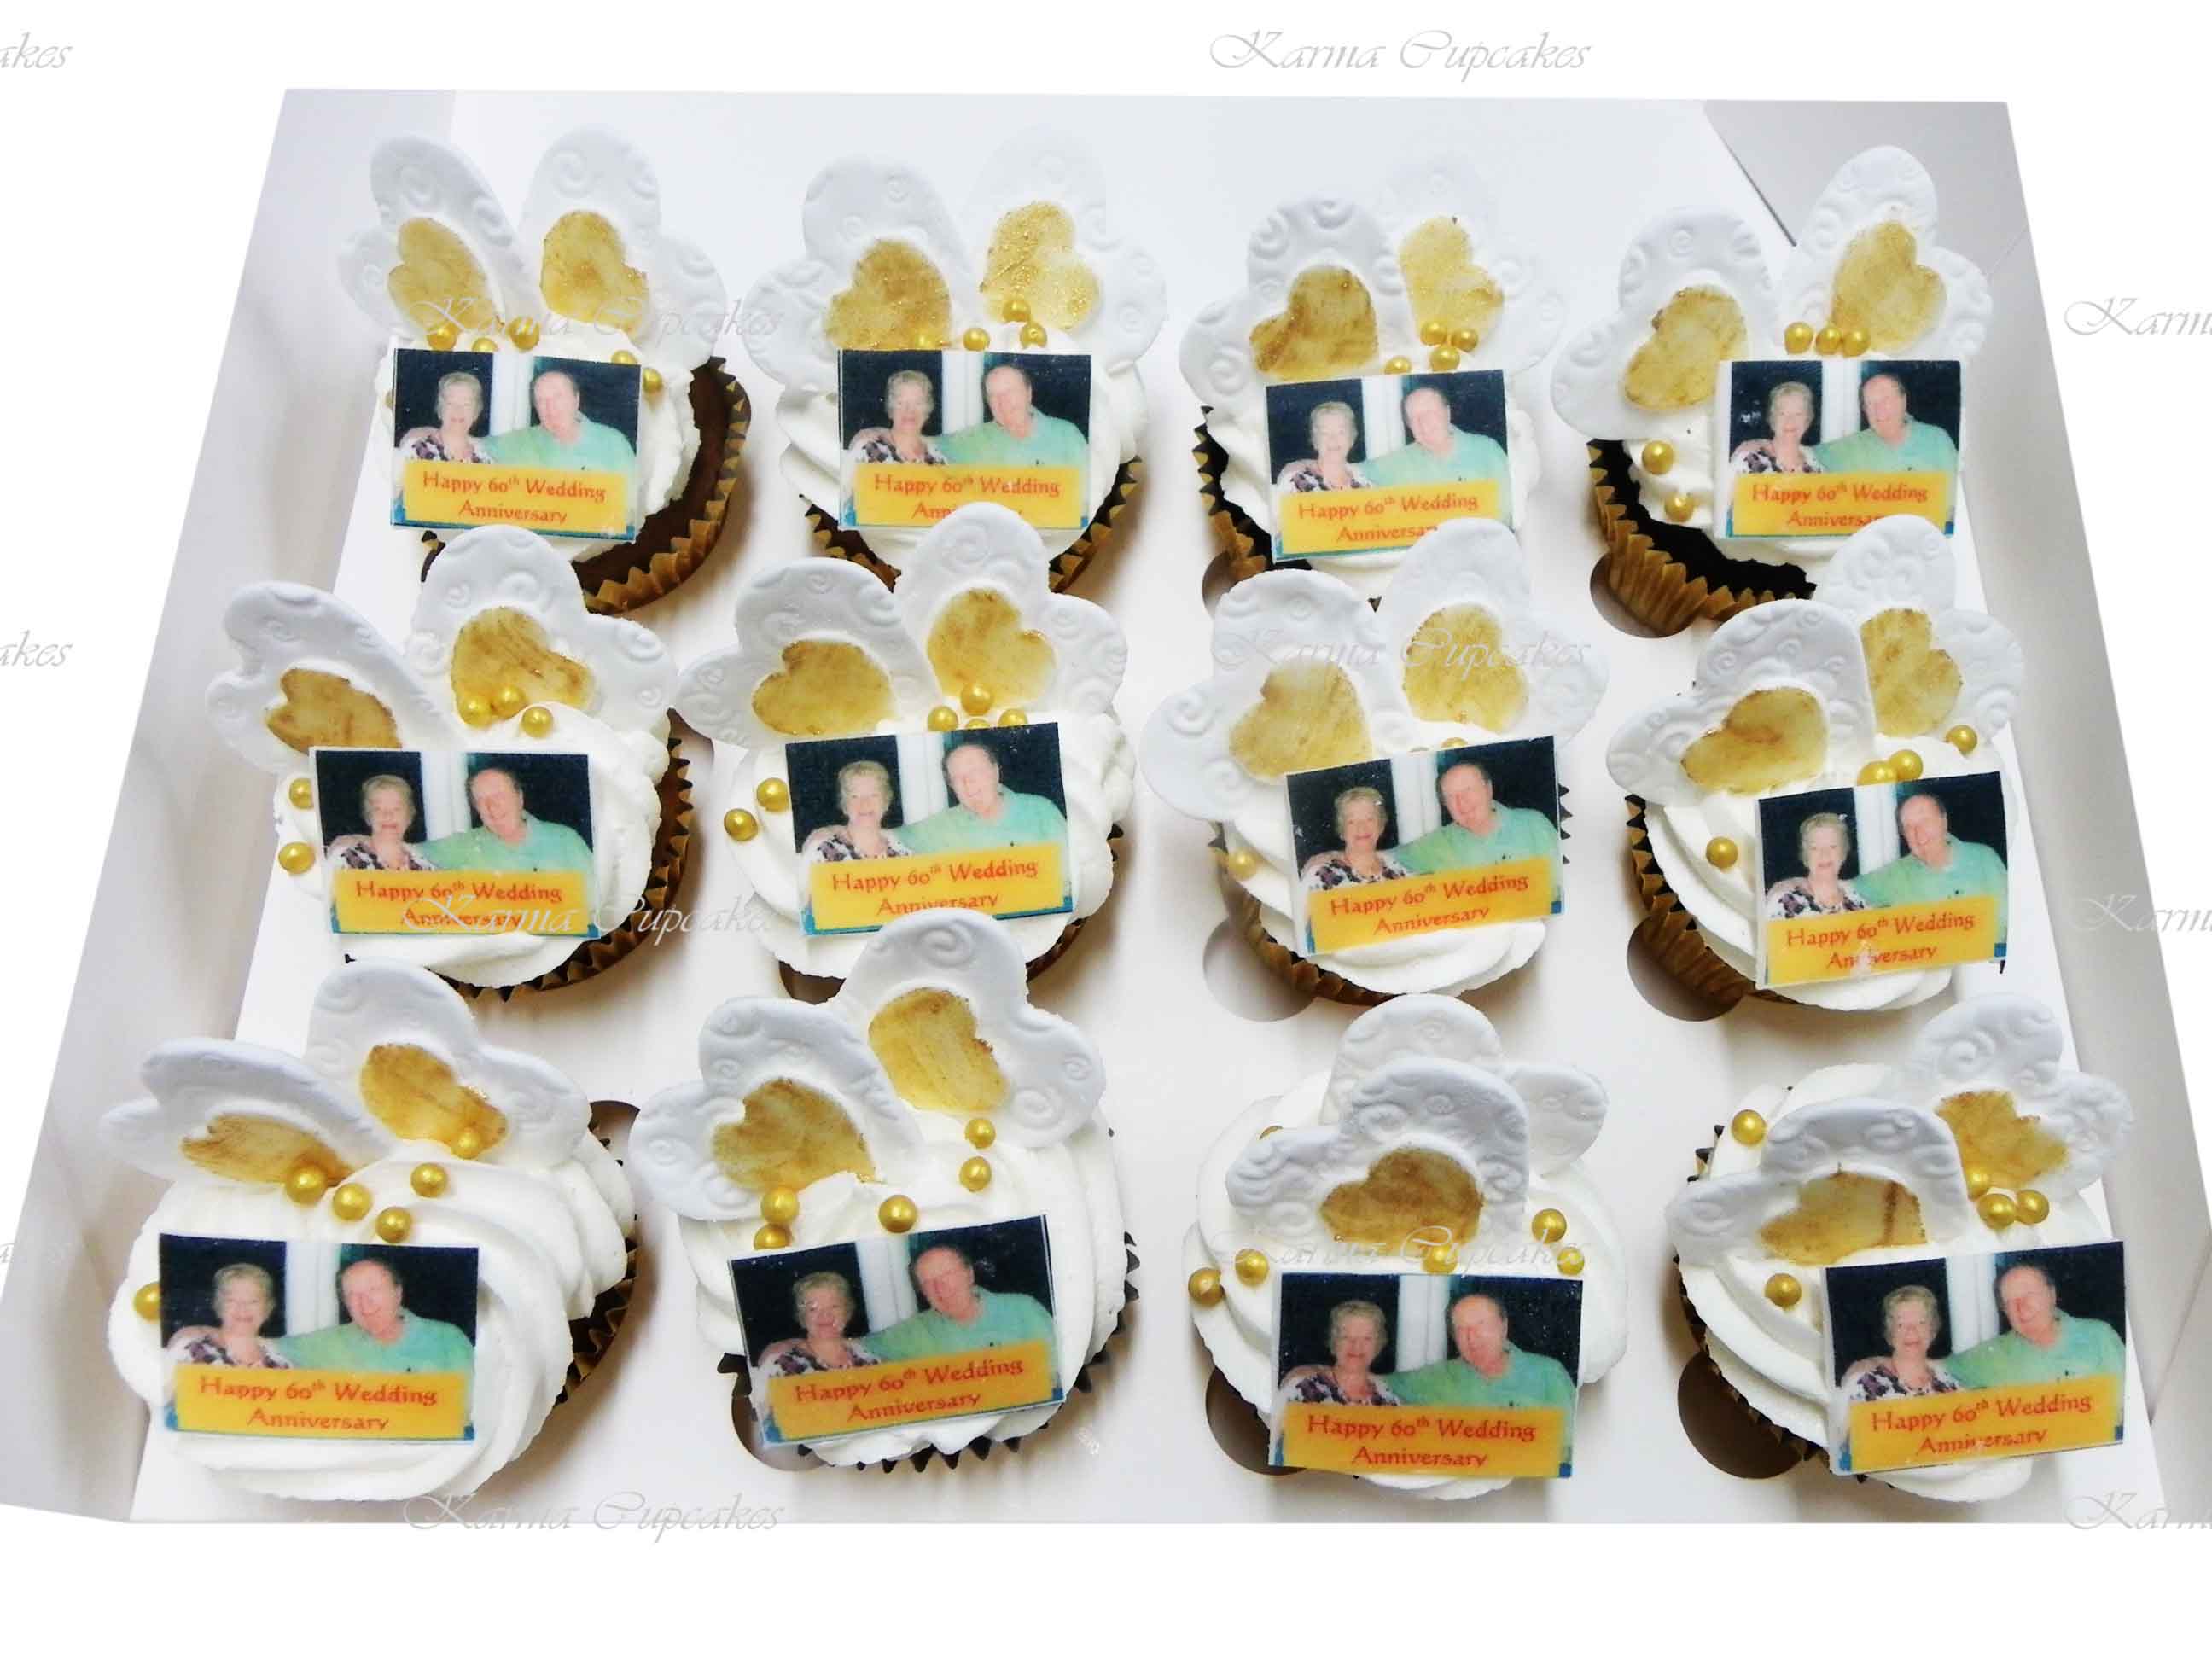 Anniversary Cupcakes with Edible Photos